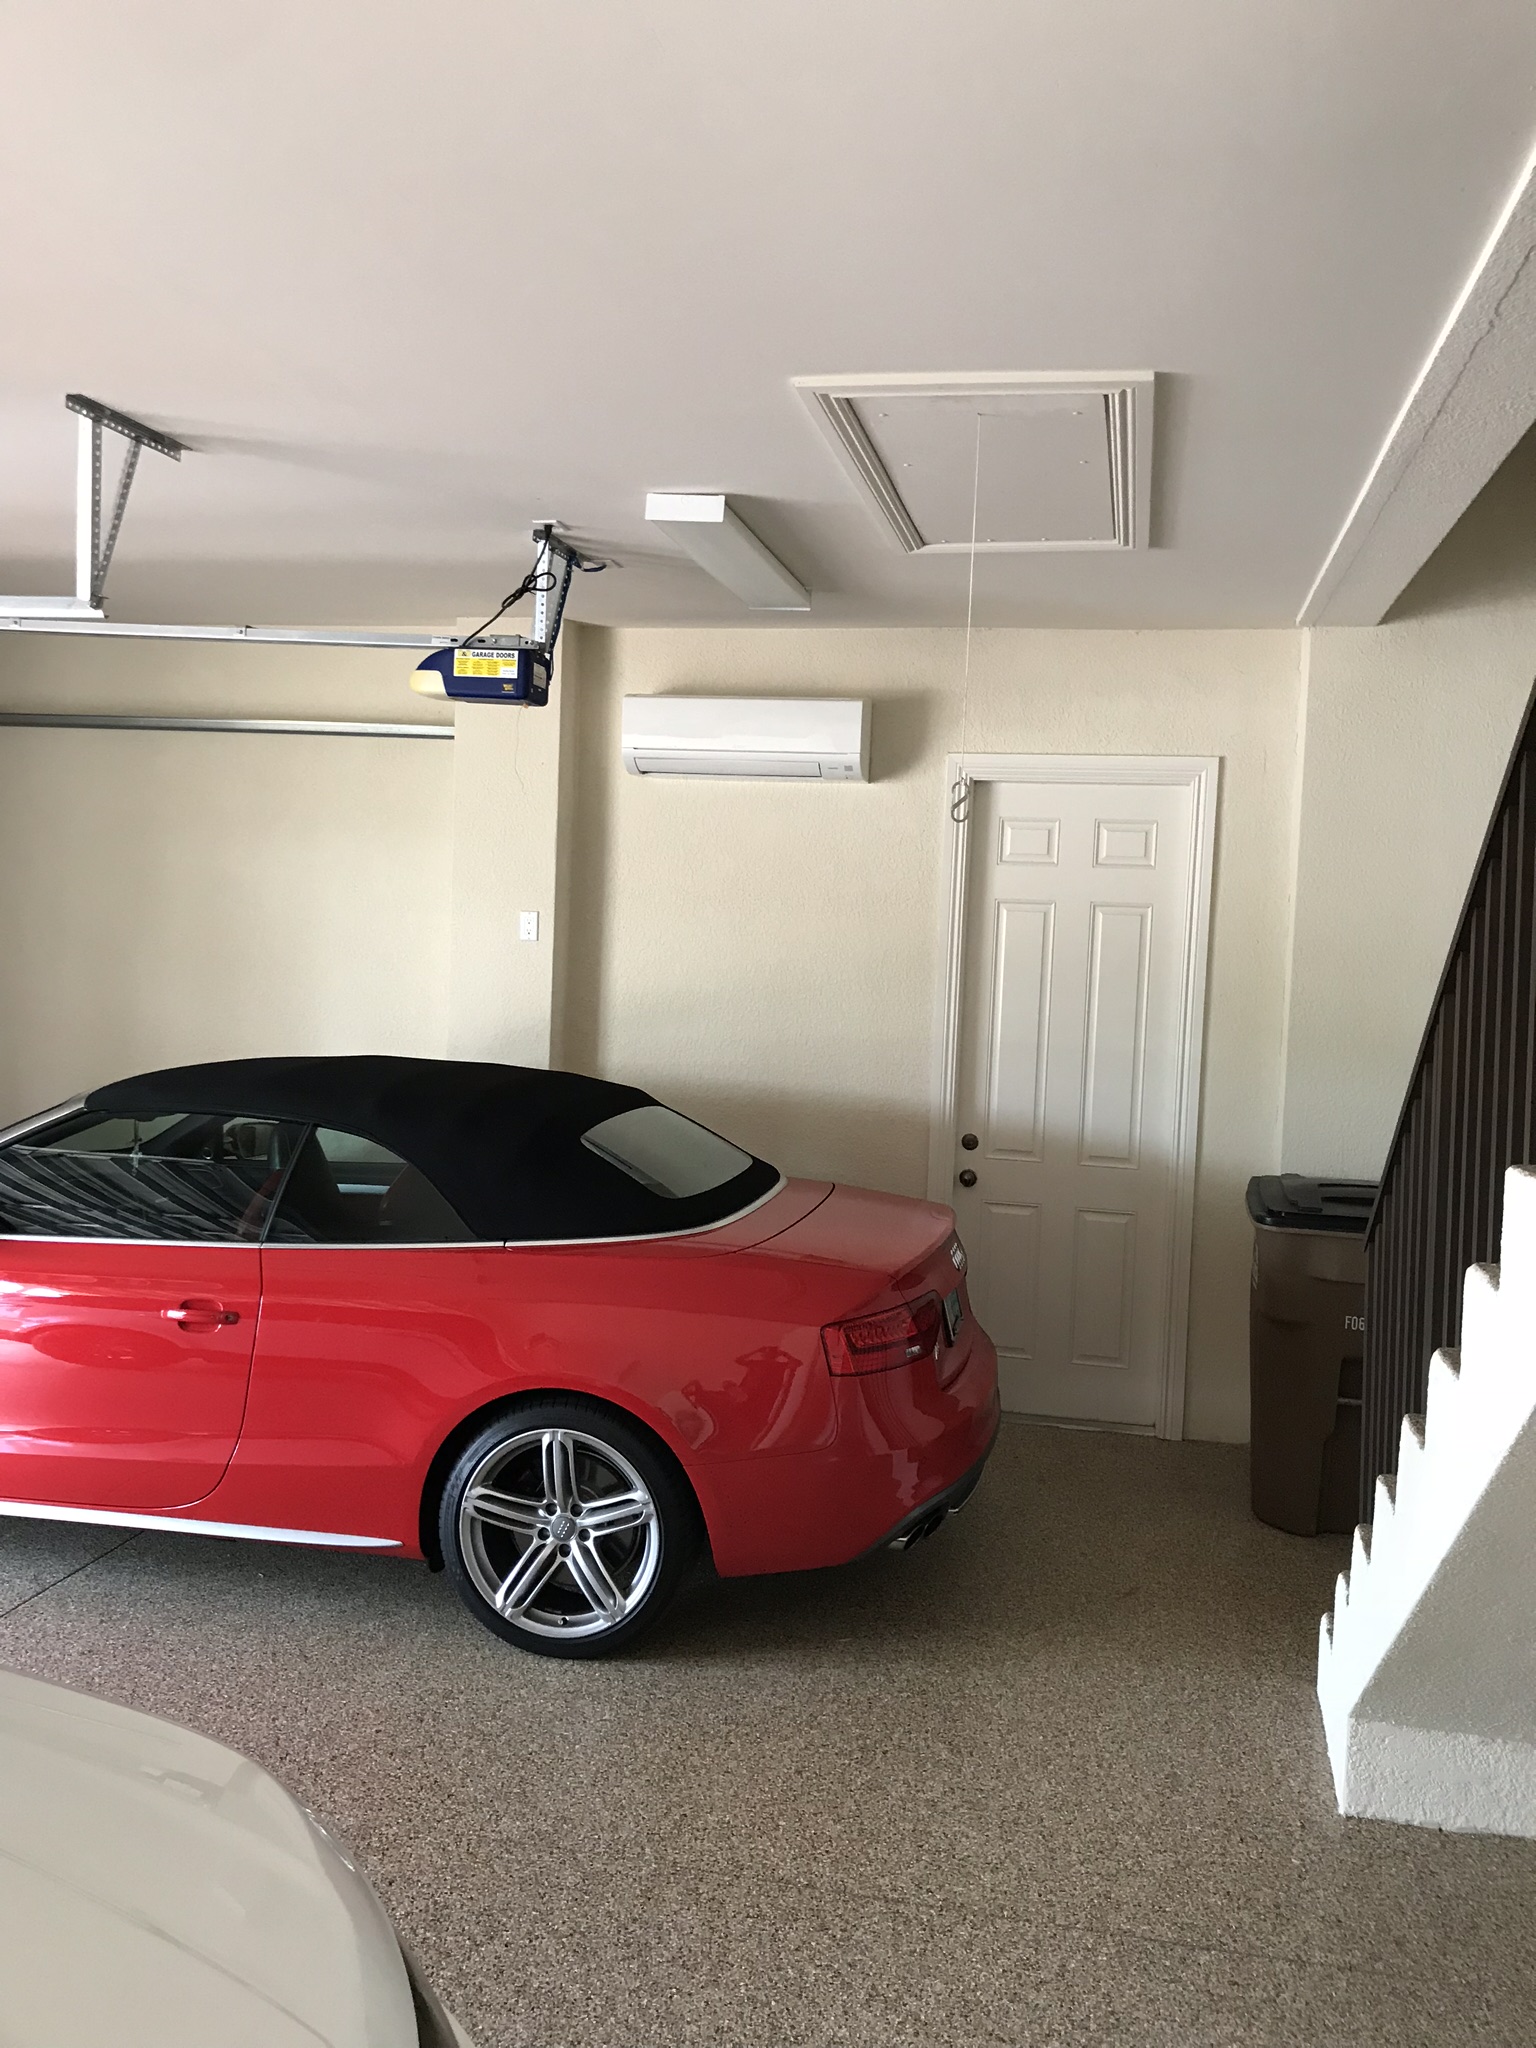 Custon garage mini-split air conditioner installation.